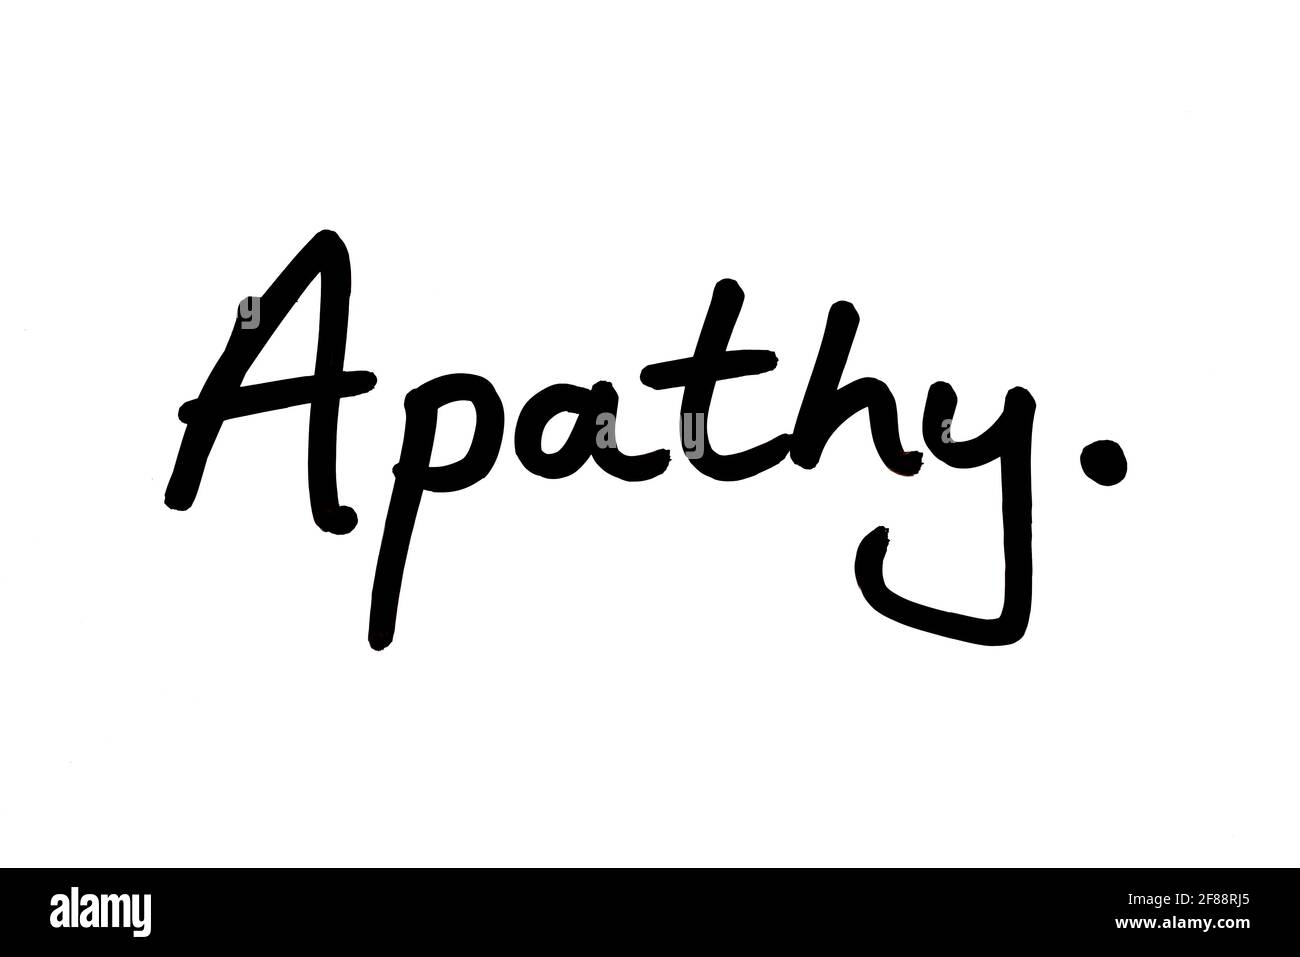 Apathy, handwritten on a white background. Stock Photo